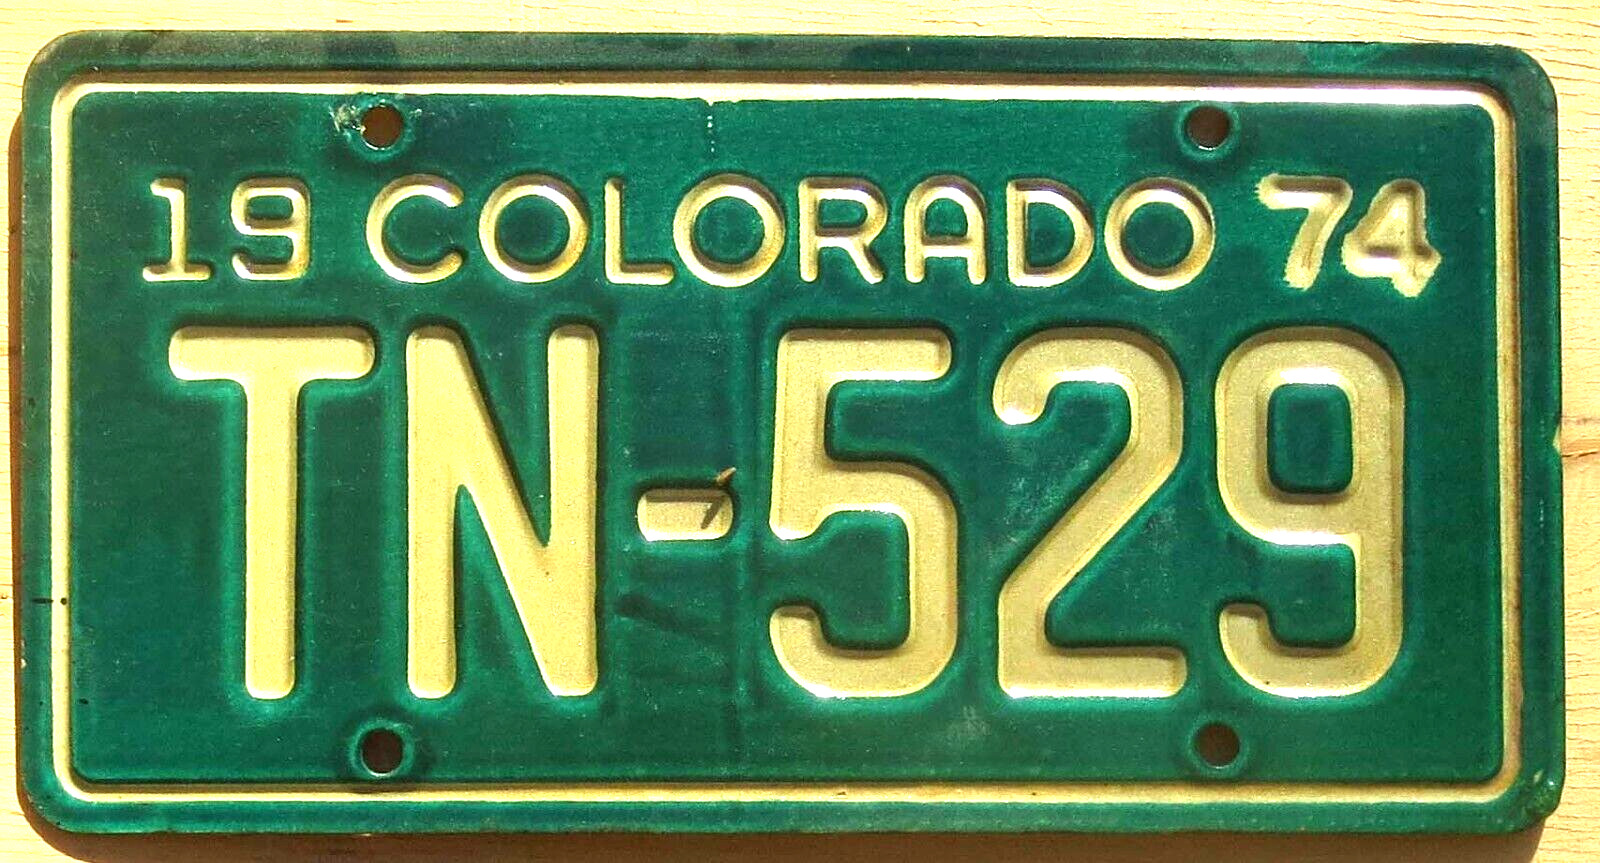 1974 Colorado Motorcycle License Plate Number Tag